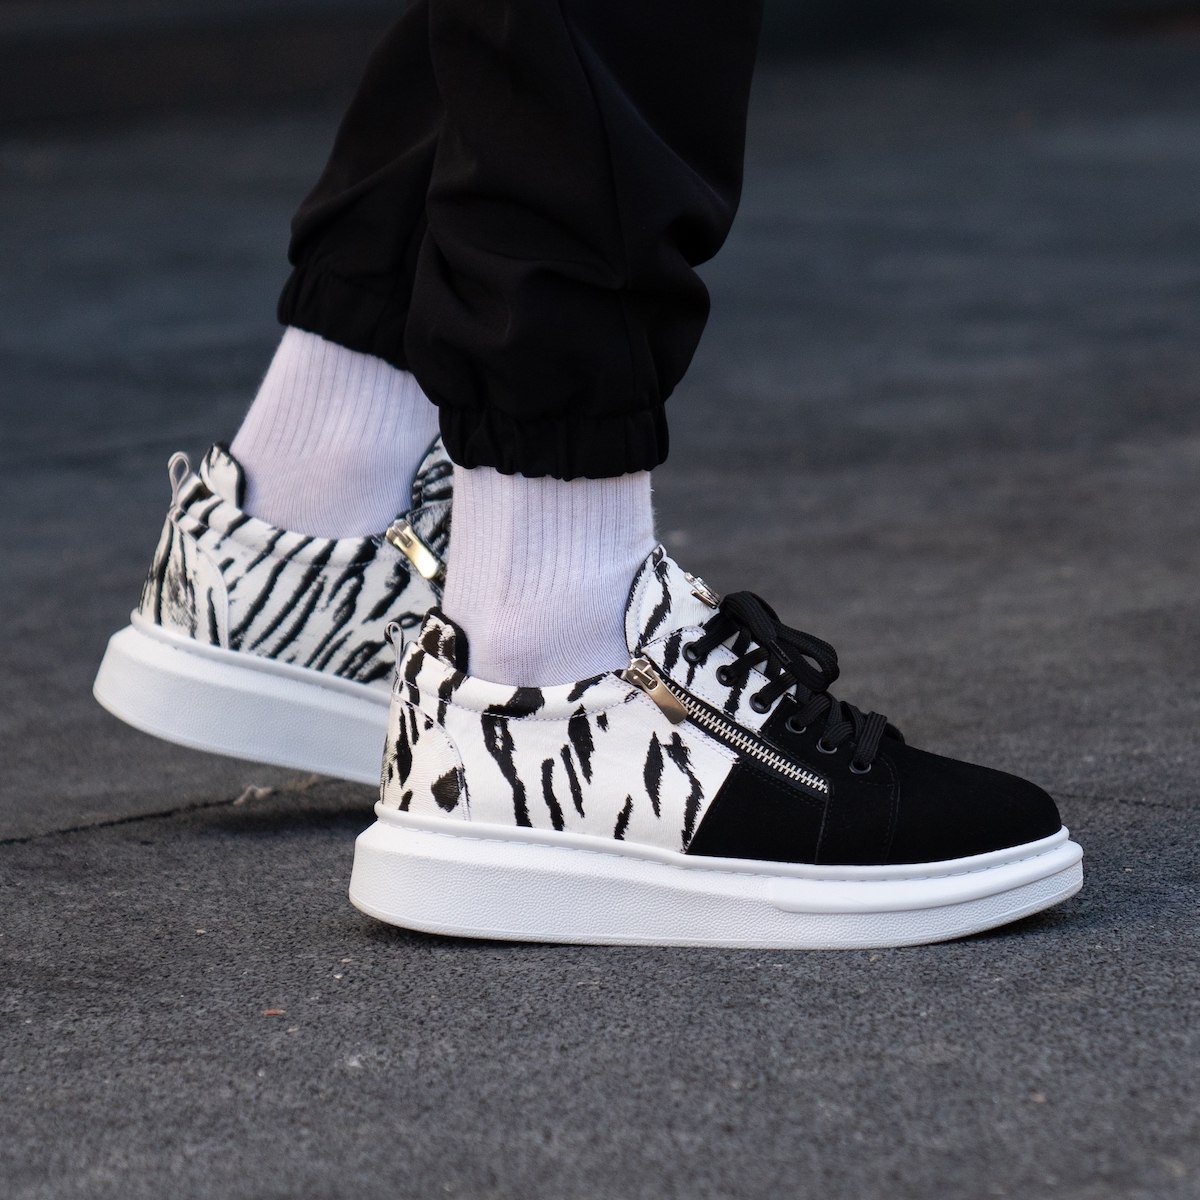 Hype Sole Zipped Style Sneakers in Black Suede Zebra Design | Martin Valen